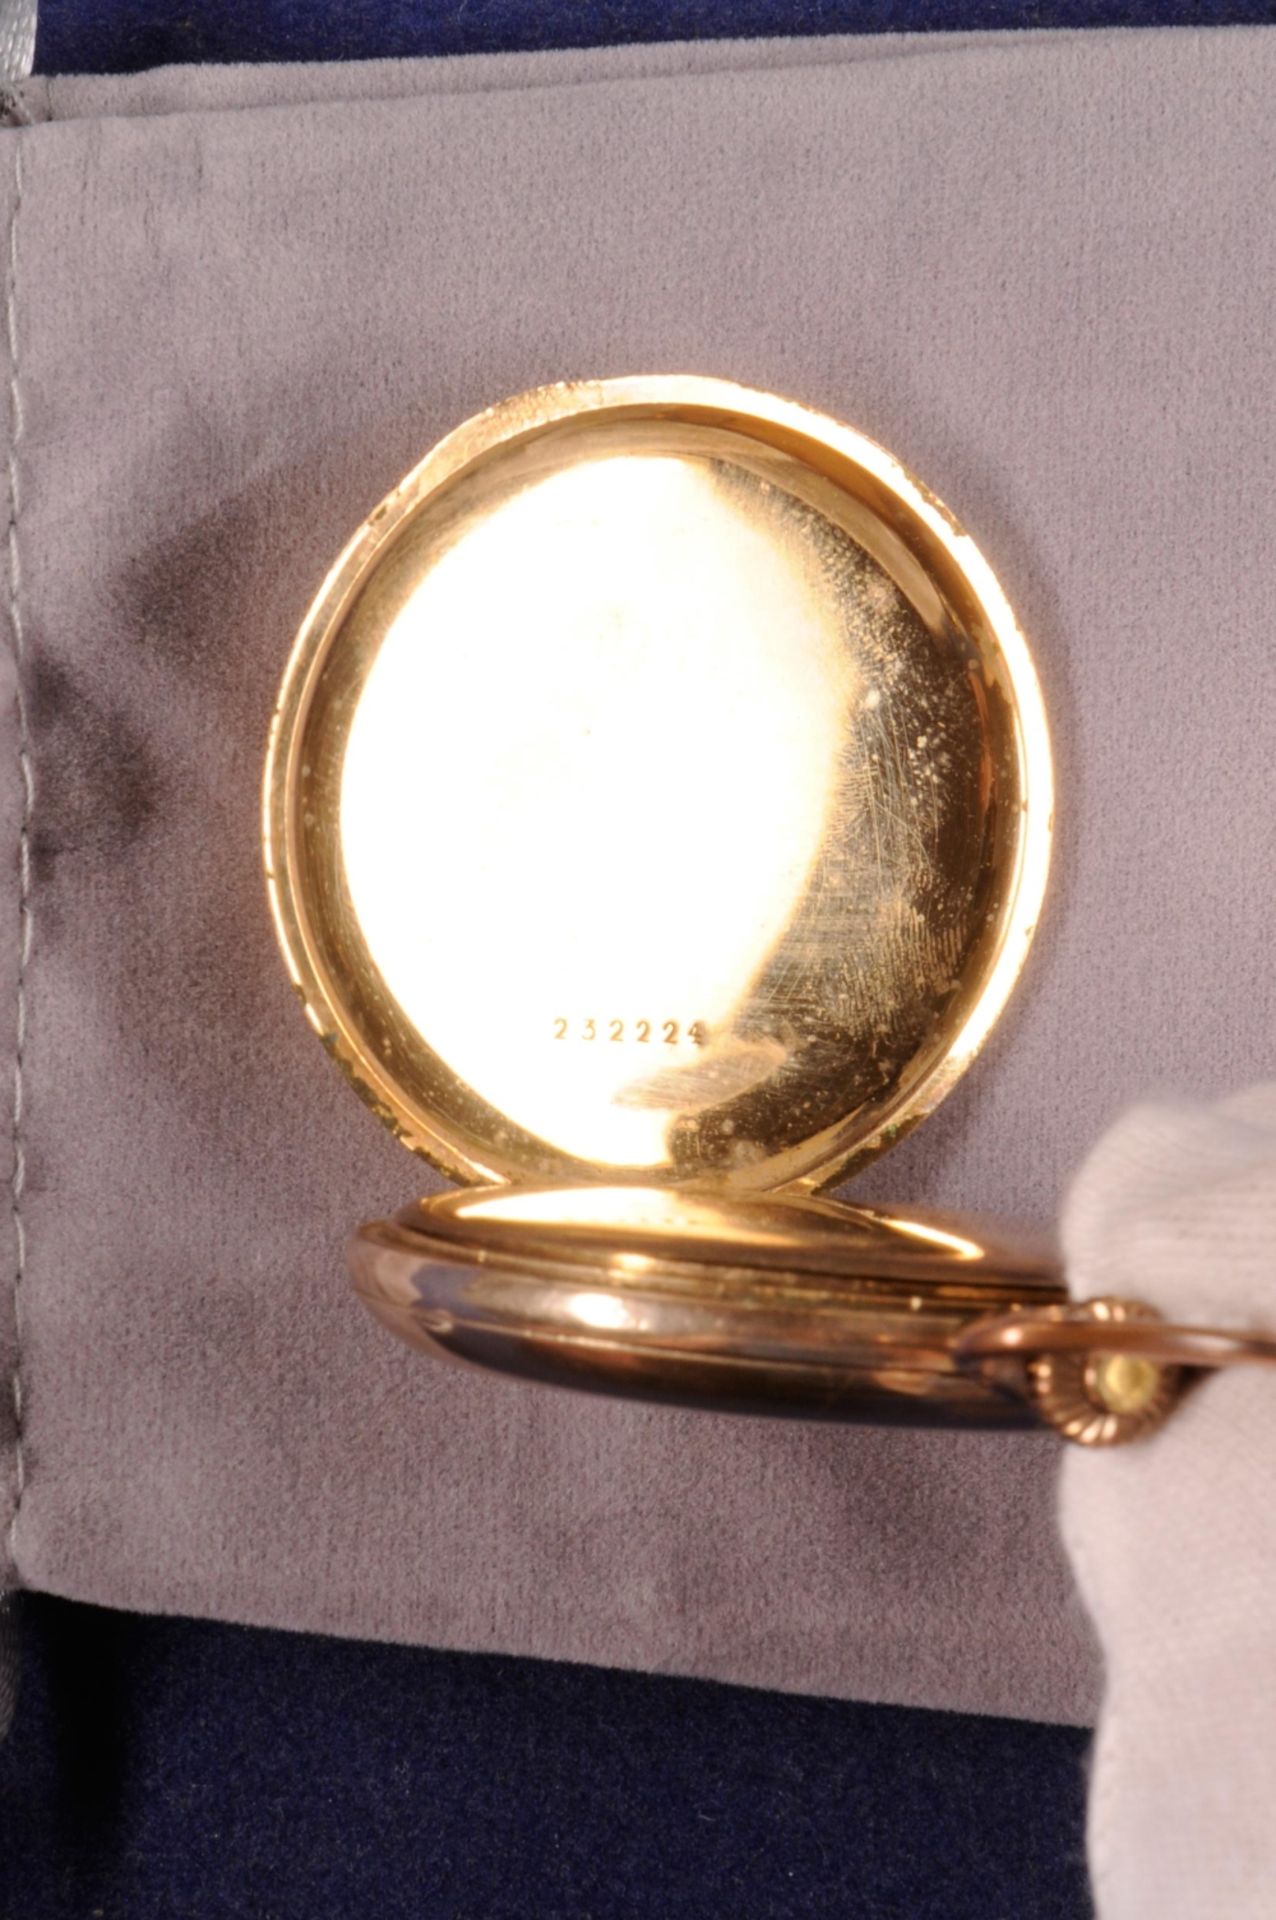 Pocket-watch \\Drusus\\ Savonette 1915-1930, design mark: bull (G. Rough Pforzheim), Germany, - Image 3 of 5